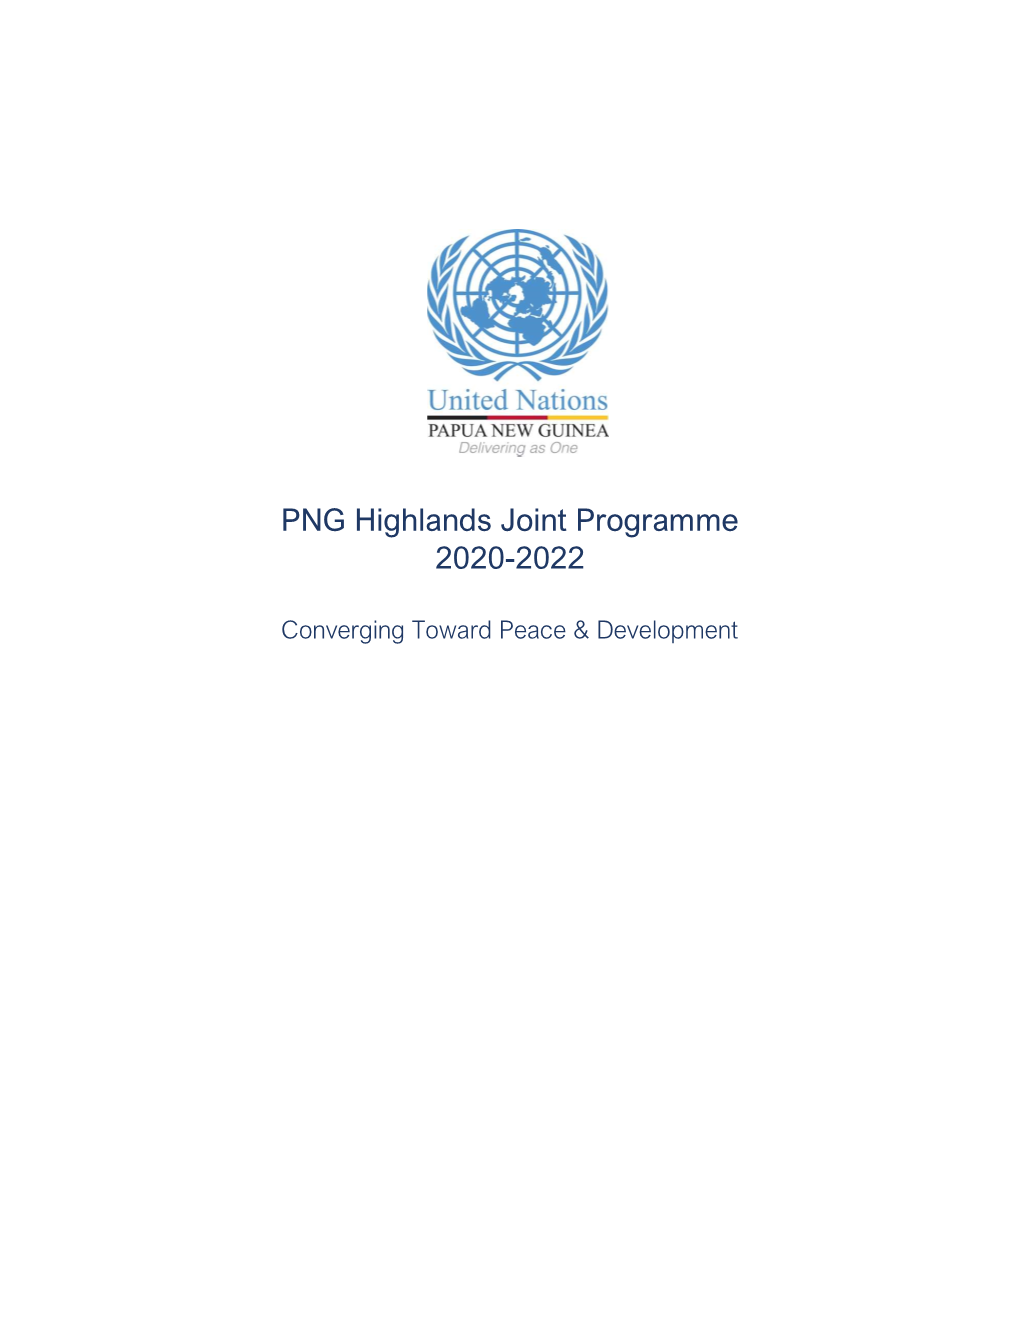 PNG Highlands Joint Programme 2020-2022